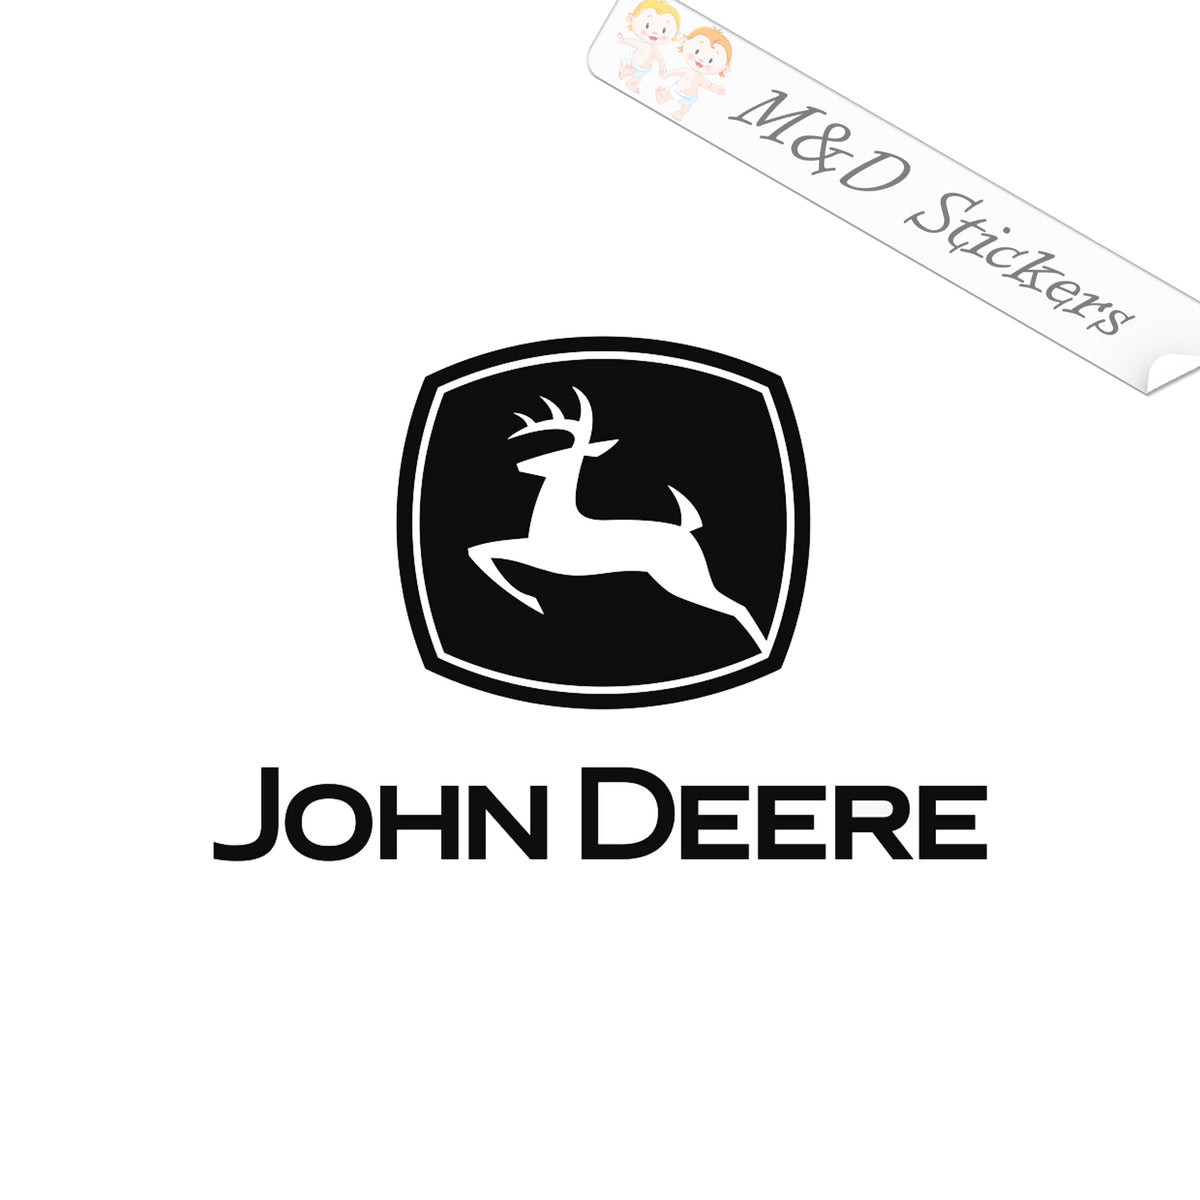 John deere Vinyl Decal by BerryVinylDesigns on   Basement remodeling,  Vinyl decals, John deere decor